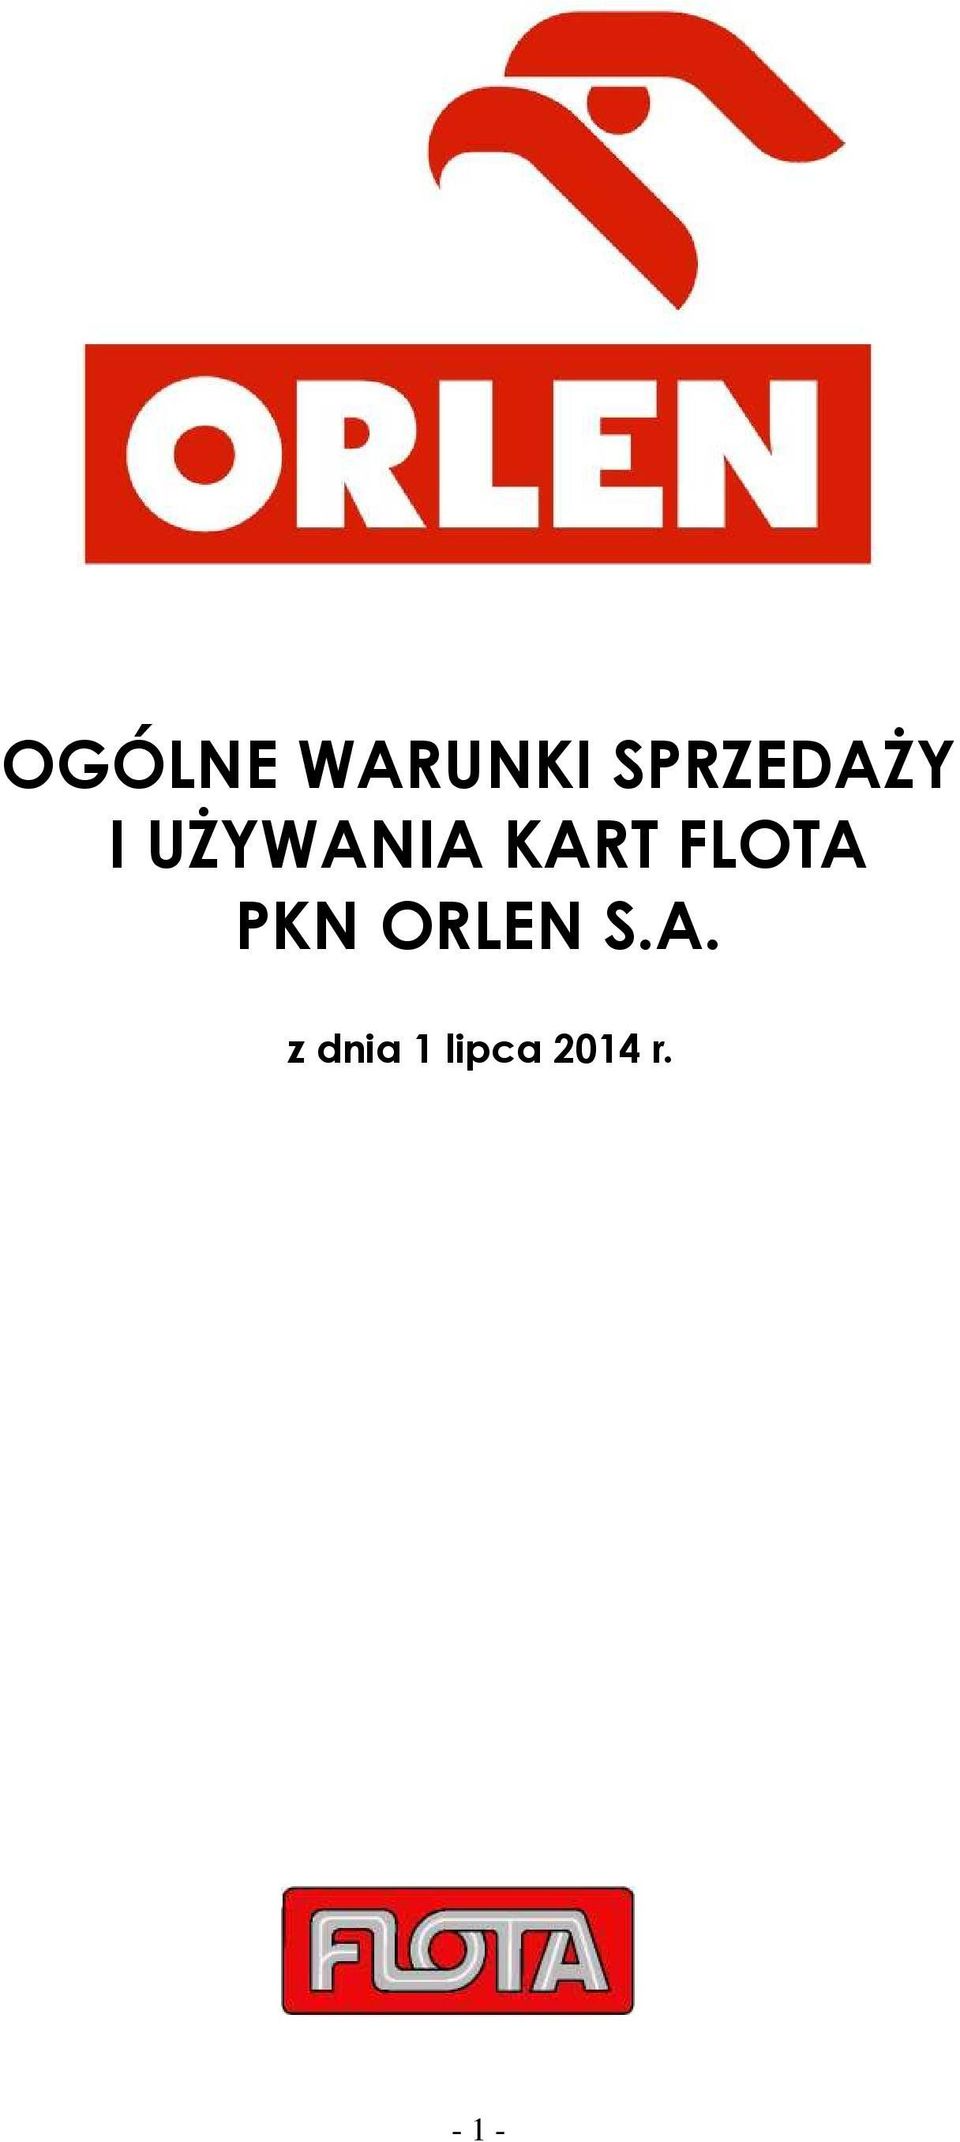 KART FLOTA PKN ORLEN S.